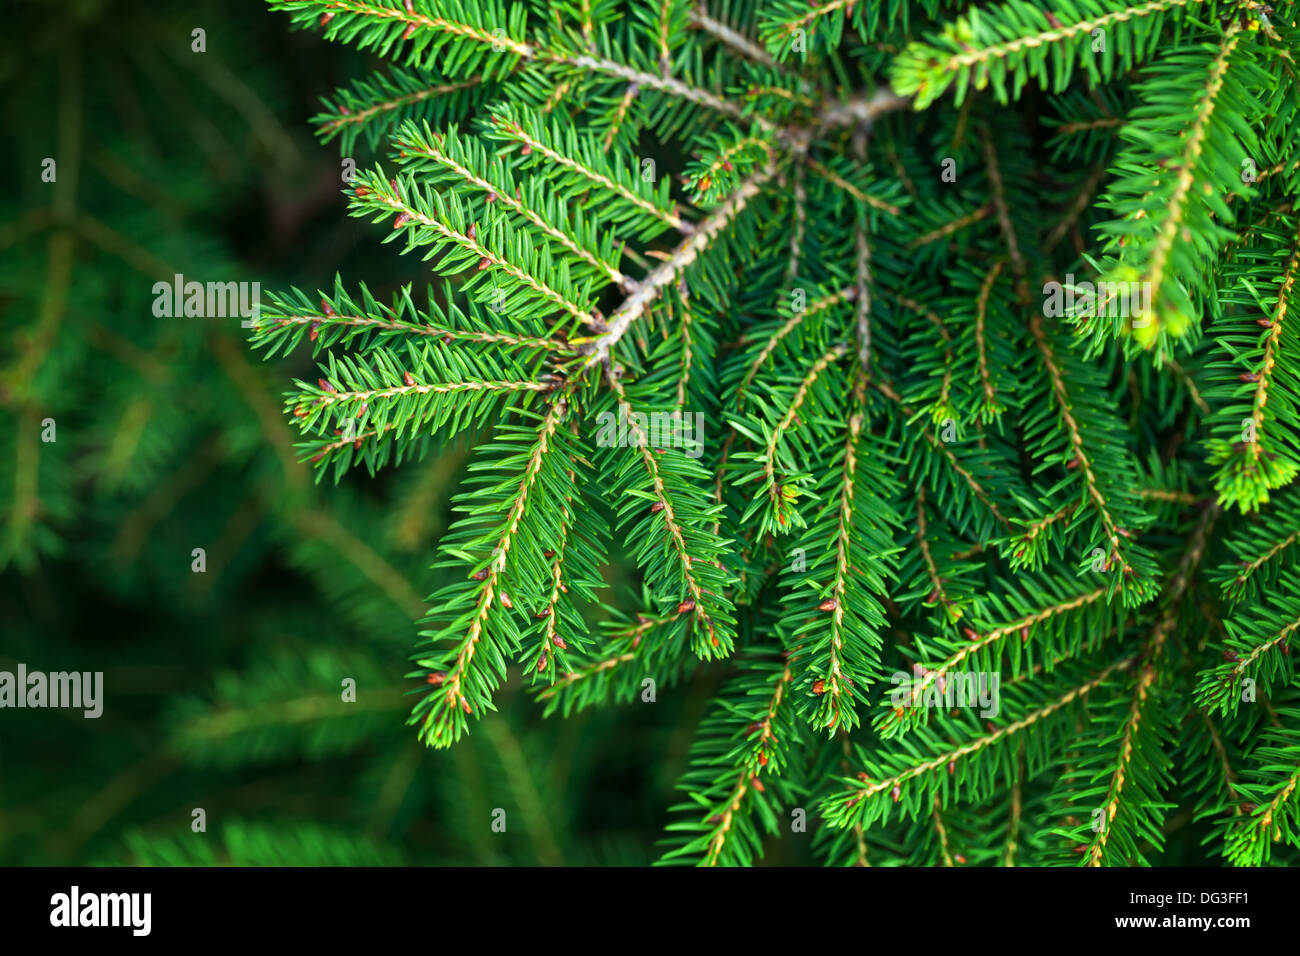 Bright green fir tree branch macro photo Stock Photo